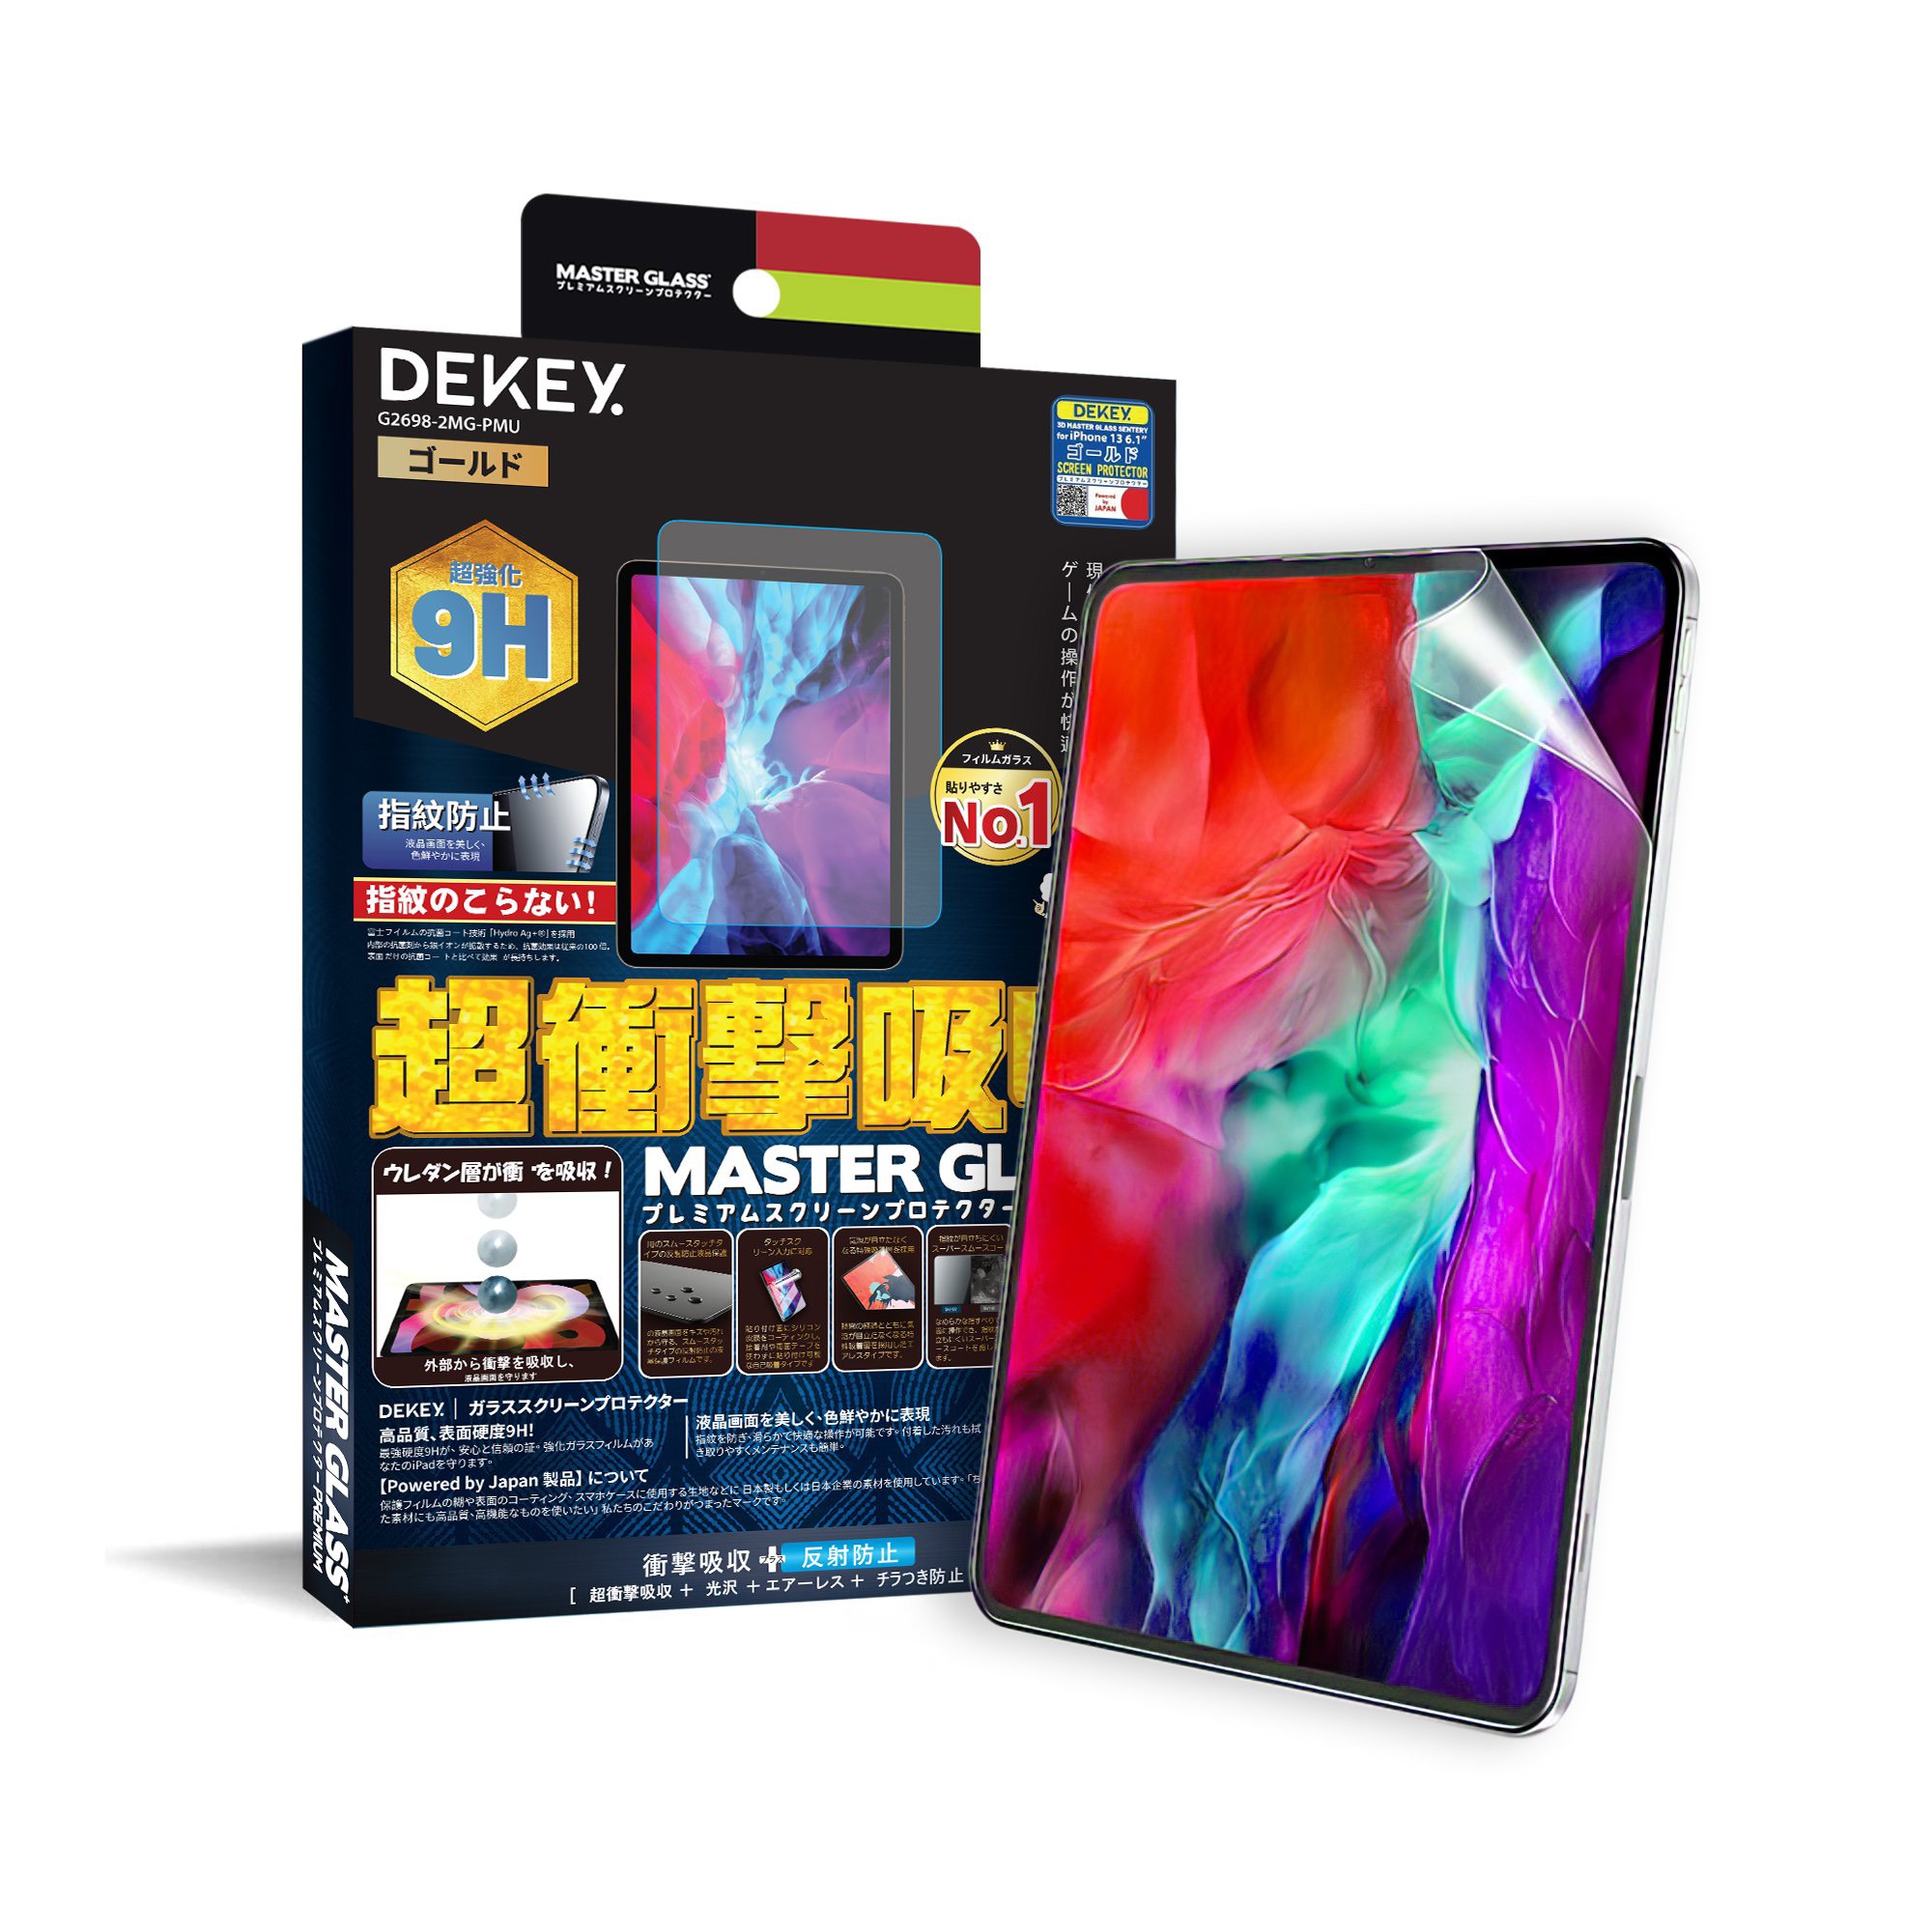 Dekey Master Glass Premium iPad Mini 4/5